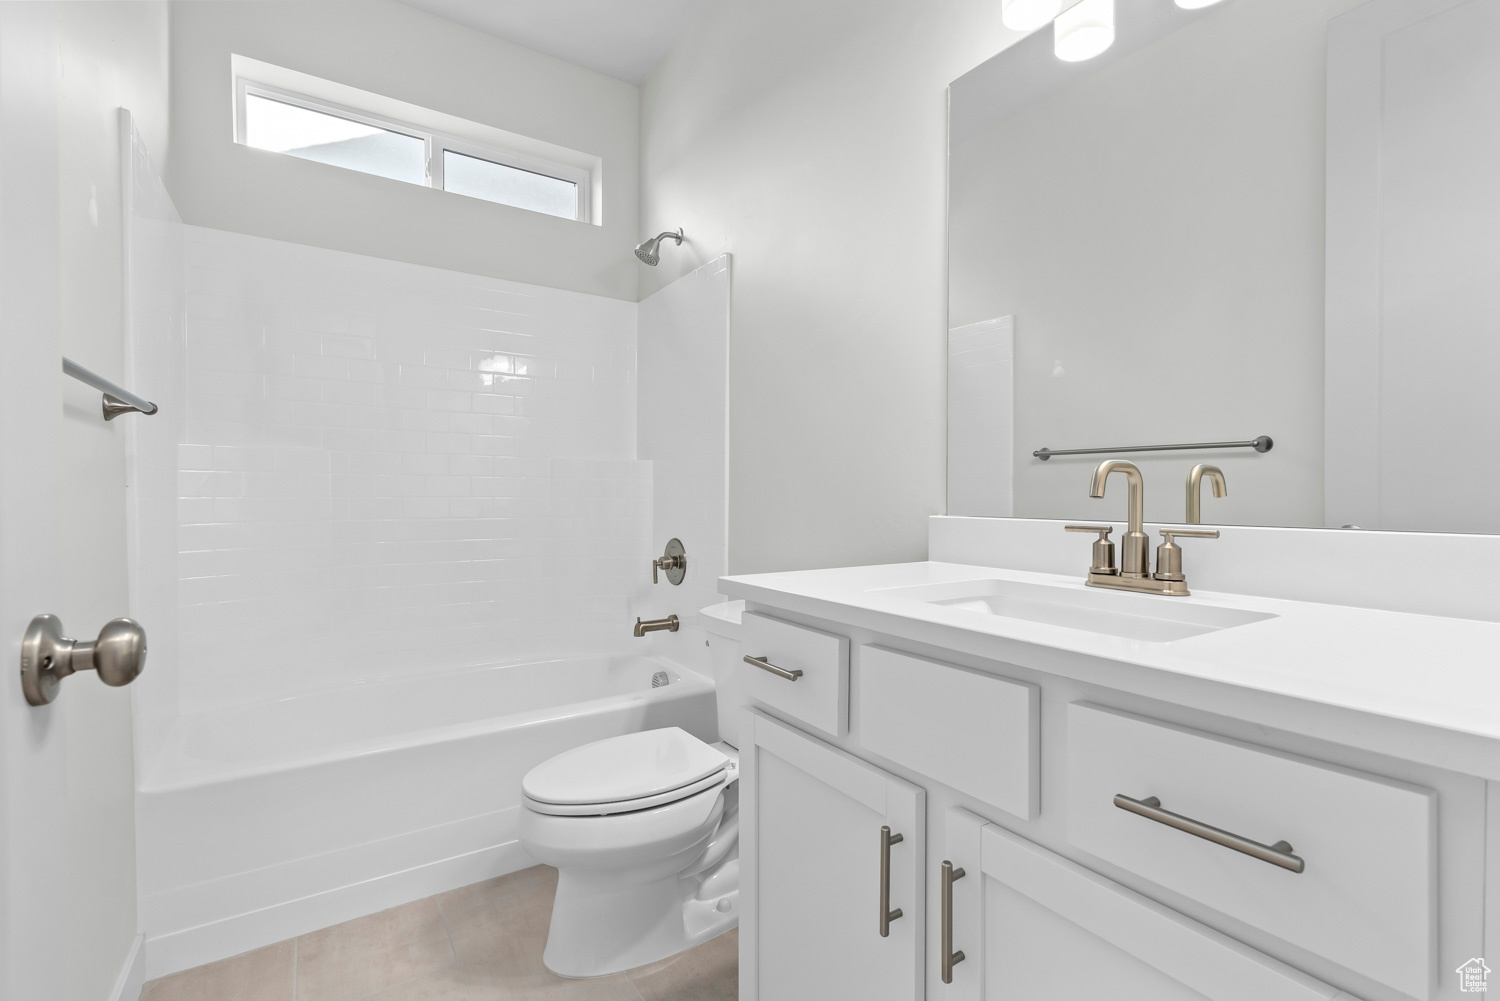 Full bathroom with vanity, toilet, shower / bathtub combination, and tile flooring